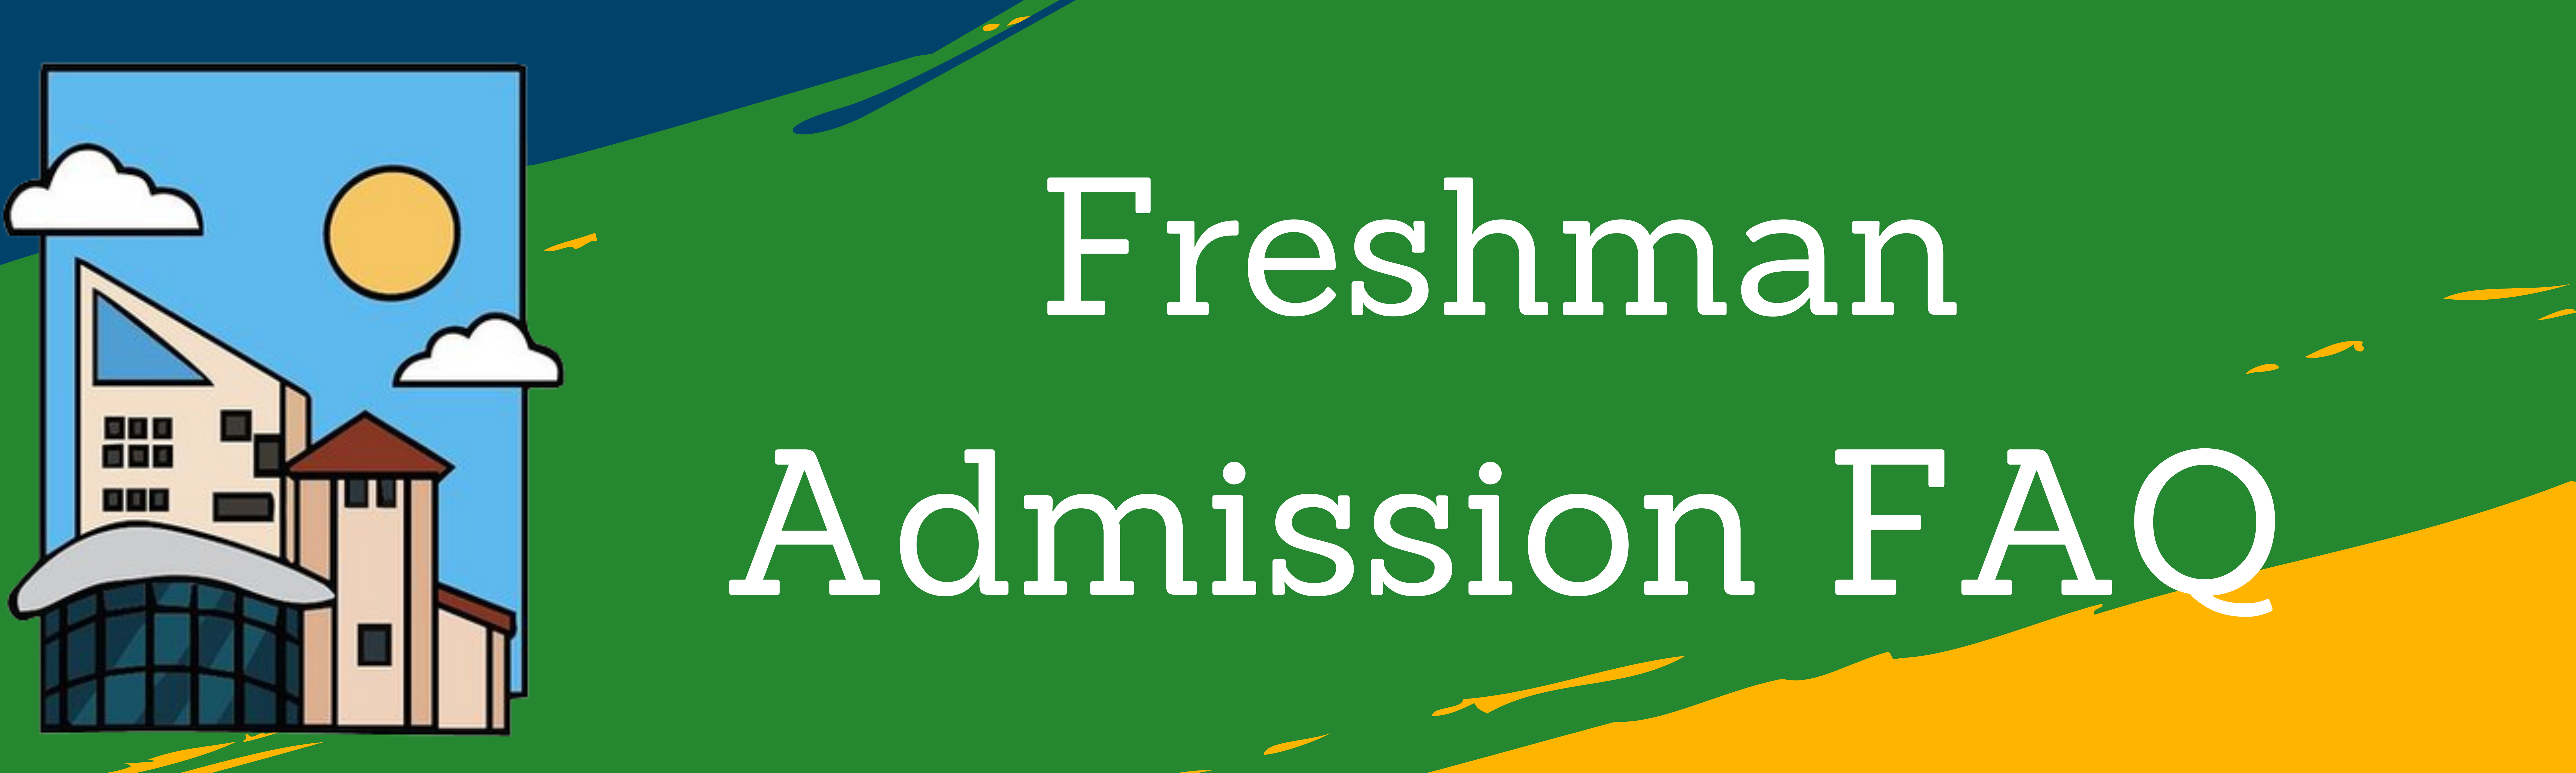 freshman admissions faq banner